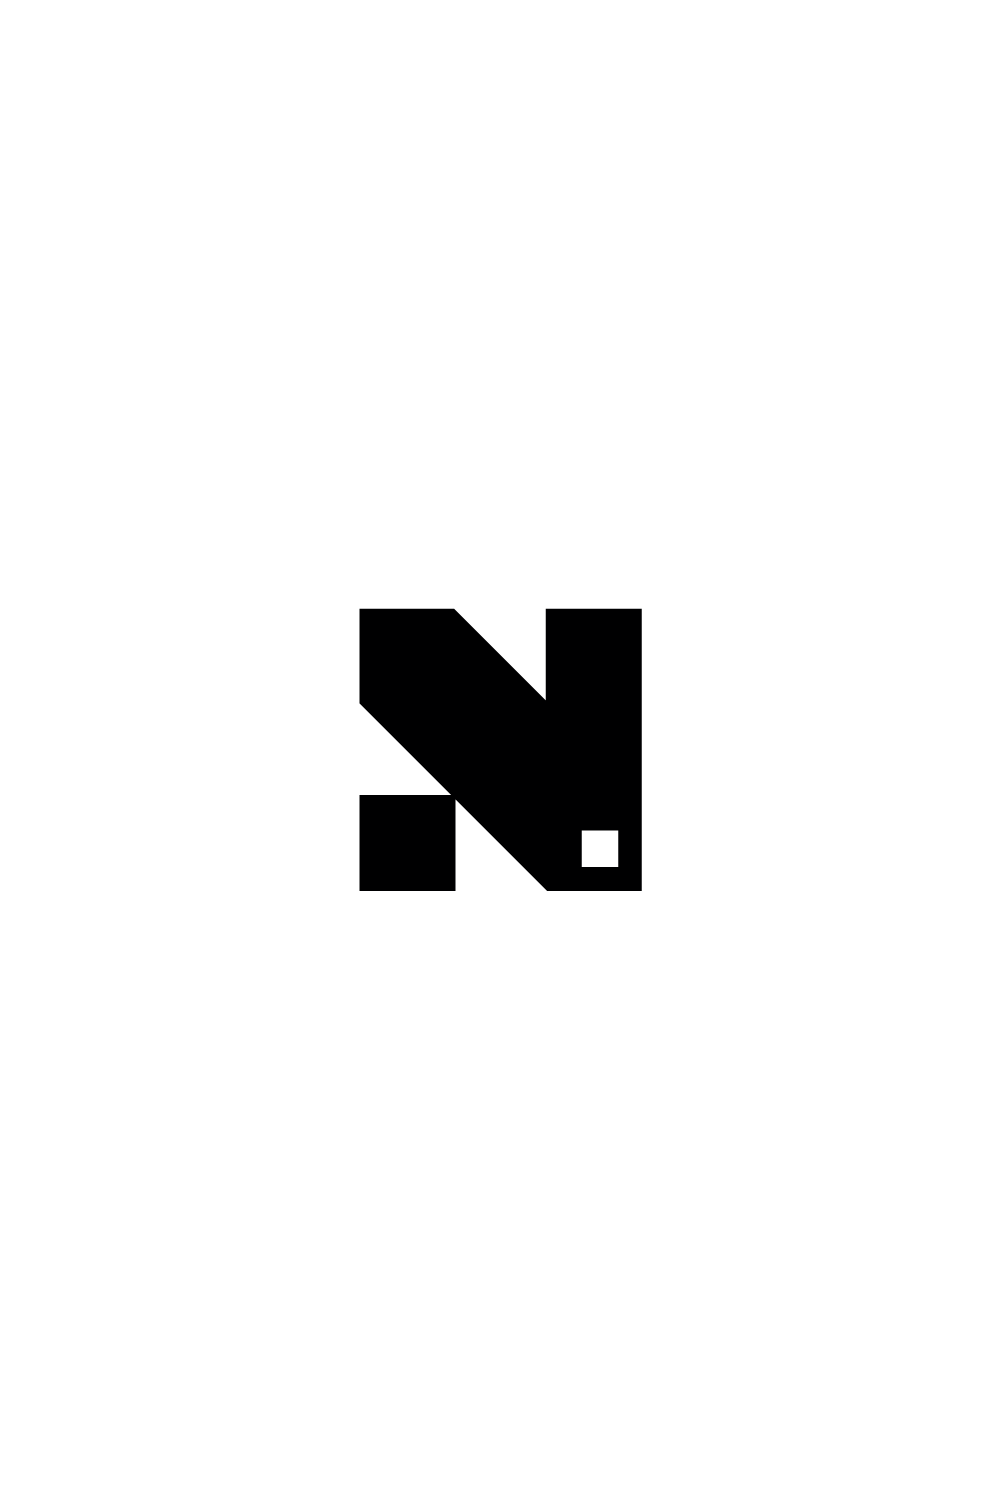 initial letter n logo vector design pinterest preview image.